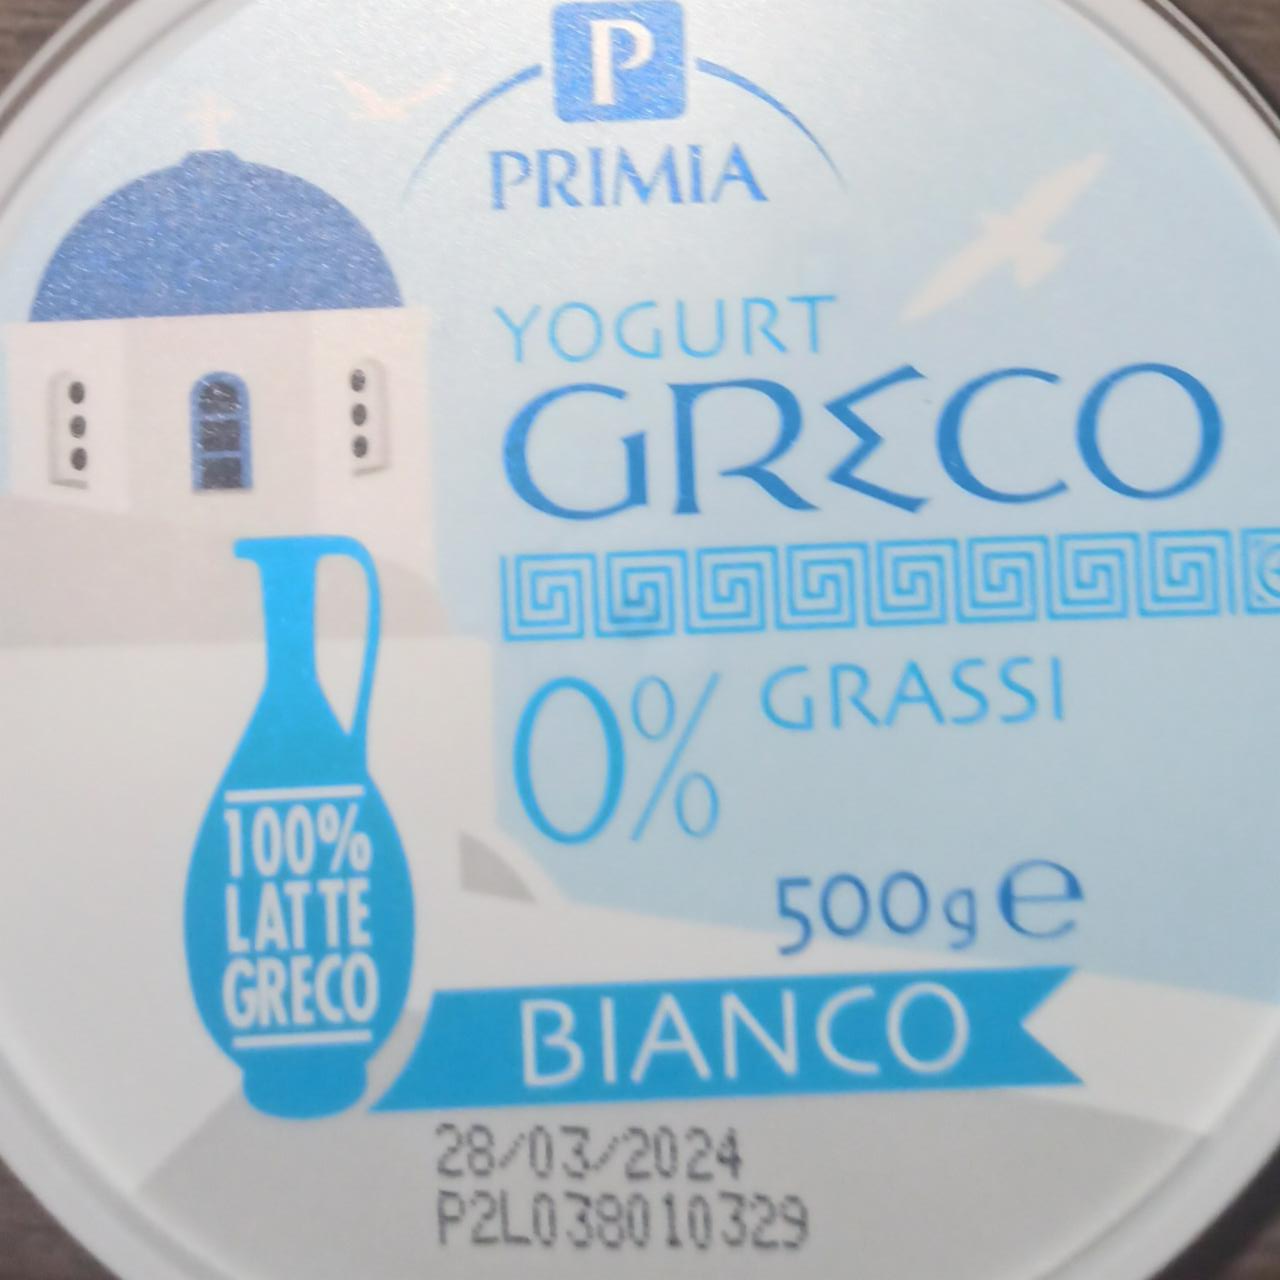 Fotografie - Yogurt Greco 0% Grassi Bianco Primia